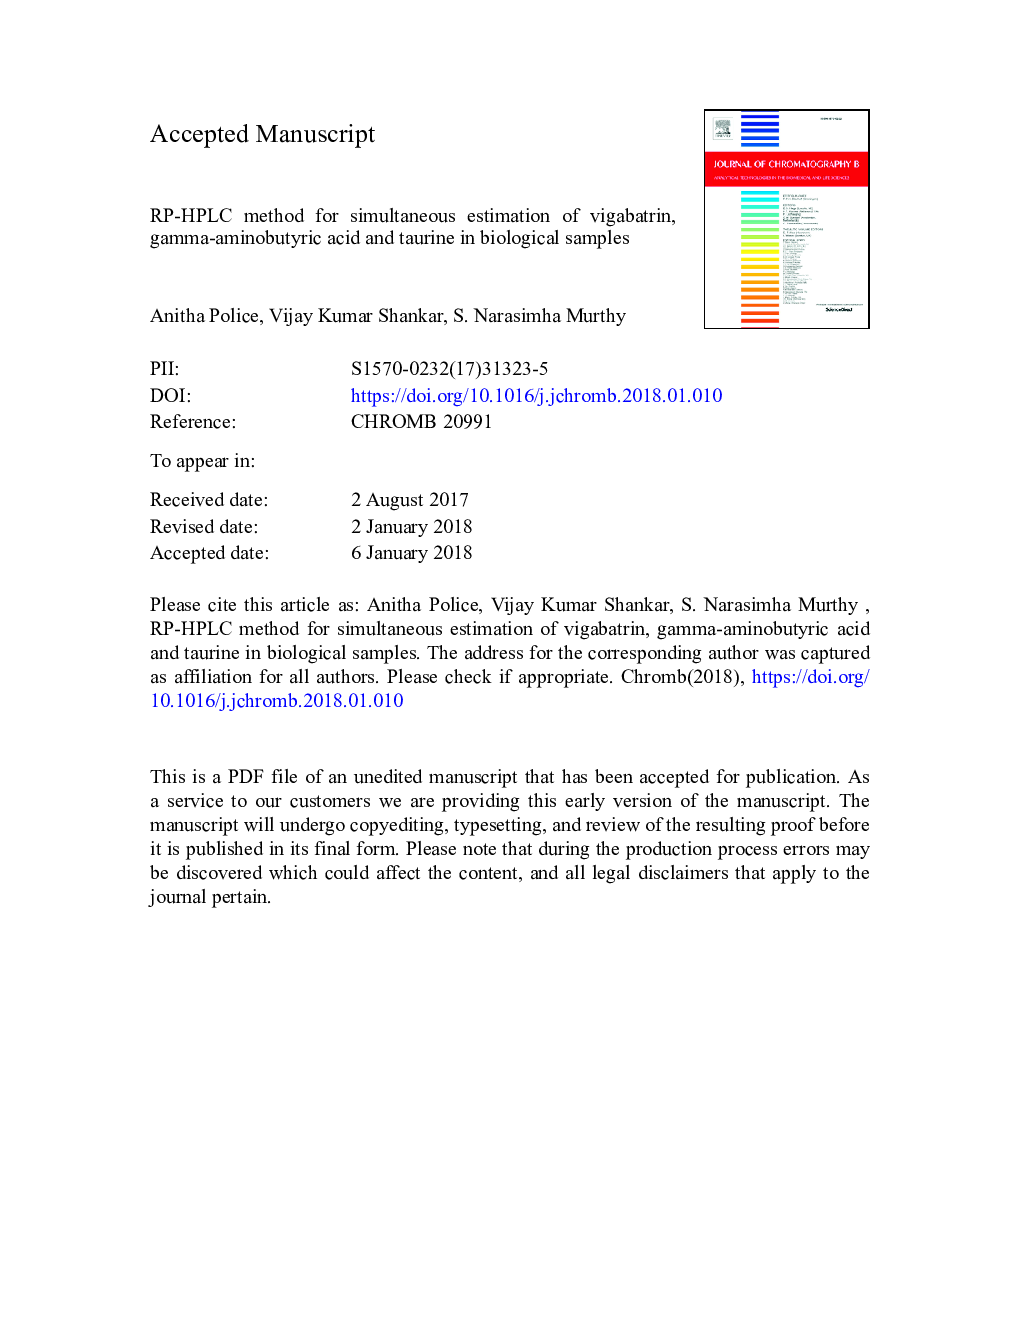 RP-HPLC method for simultaneous estimation of vigabatrin, gamma-aminobutyric acid and taurine in biological samples